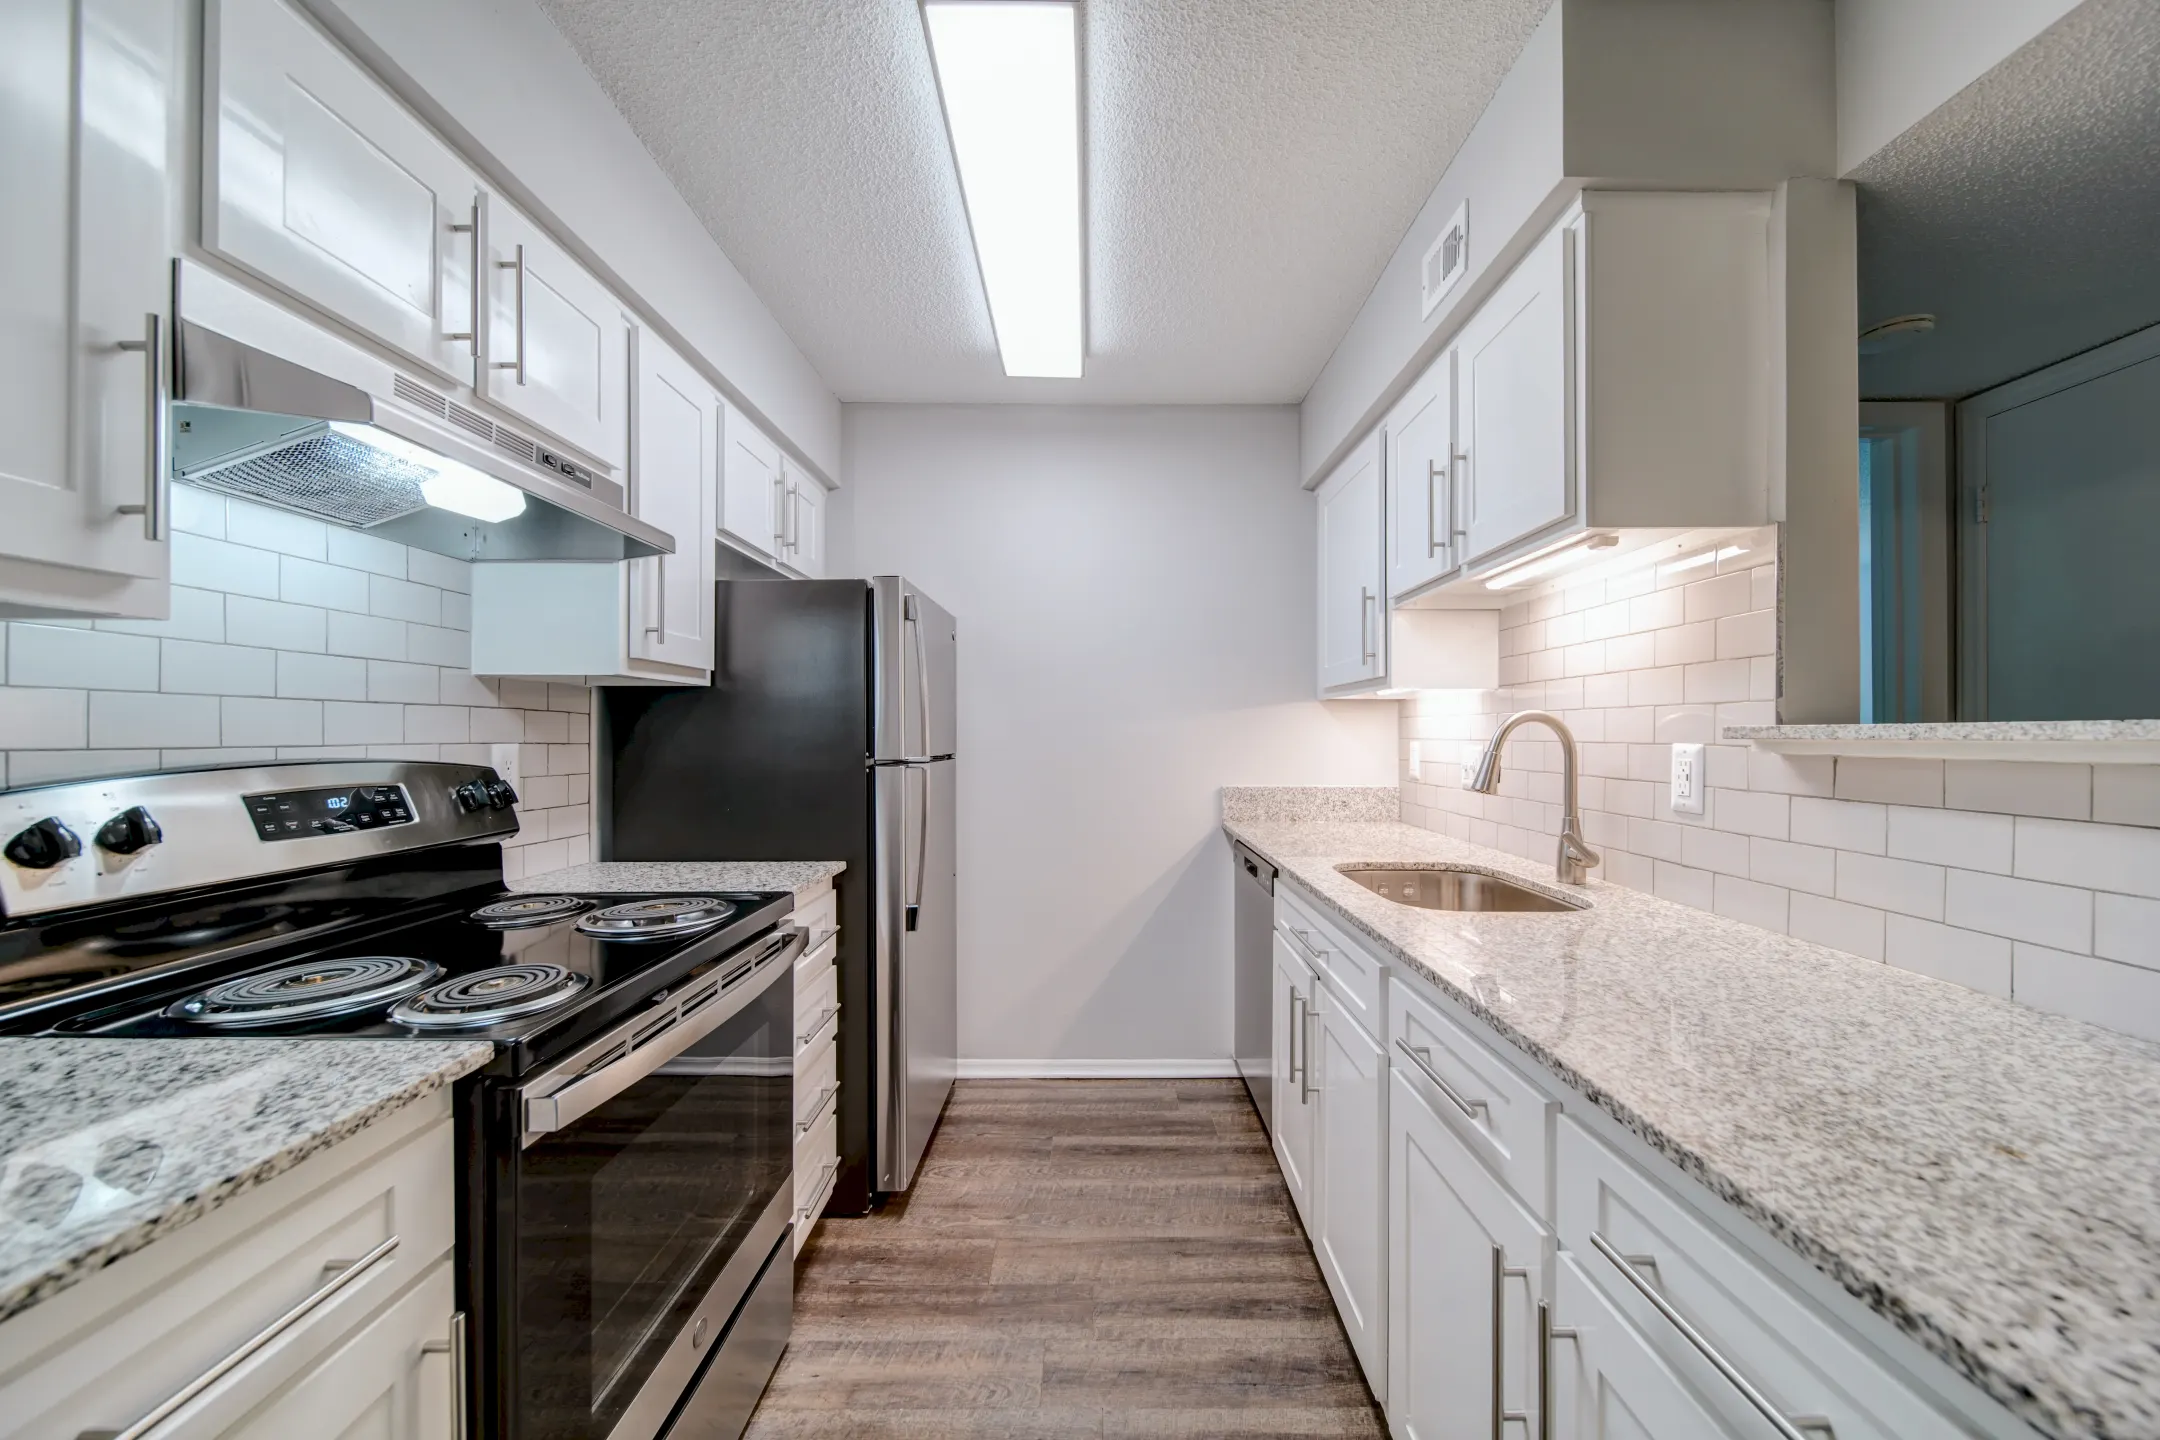 Kitchen - The Cove Apartment Homes - Gastonia, NC